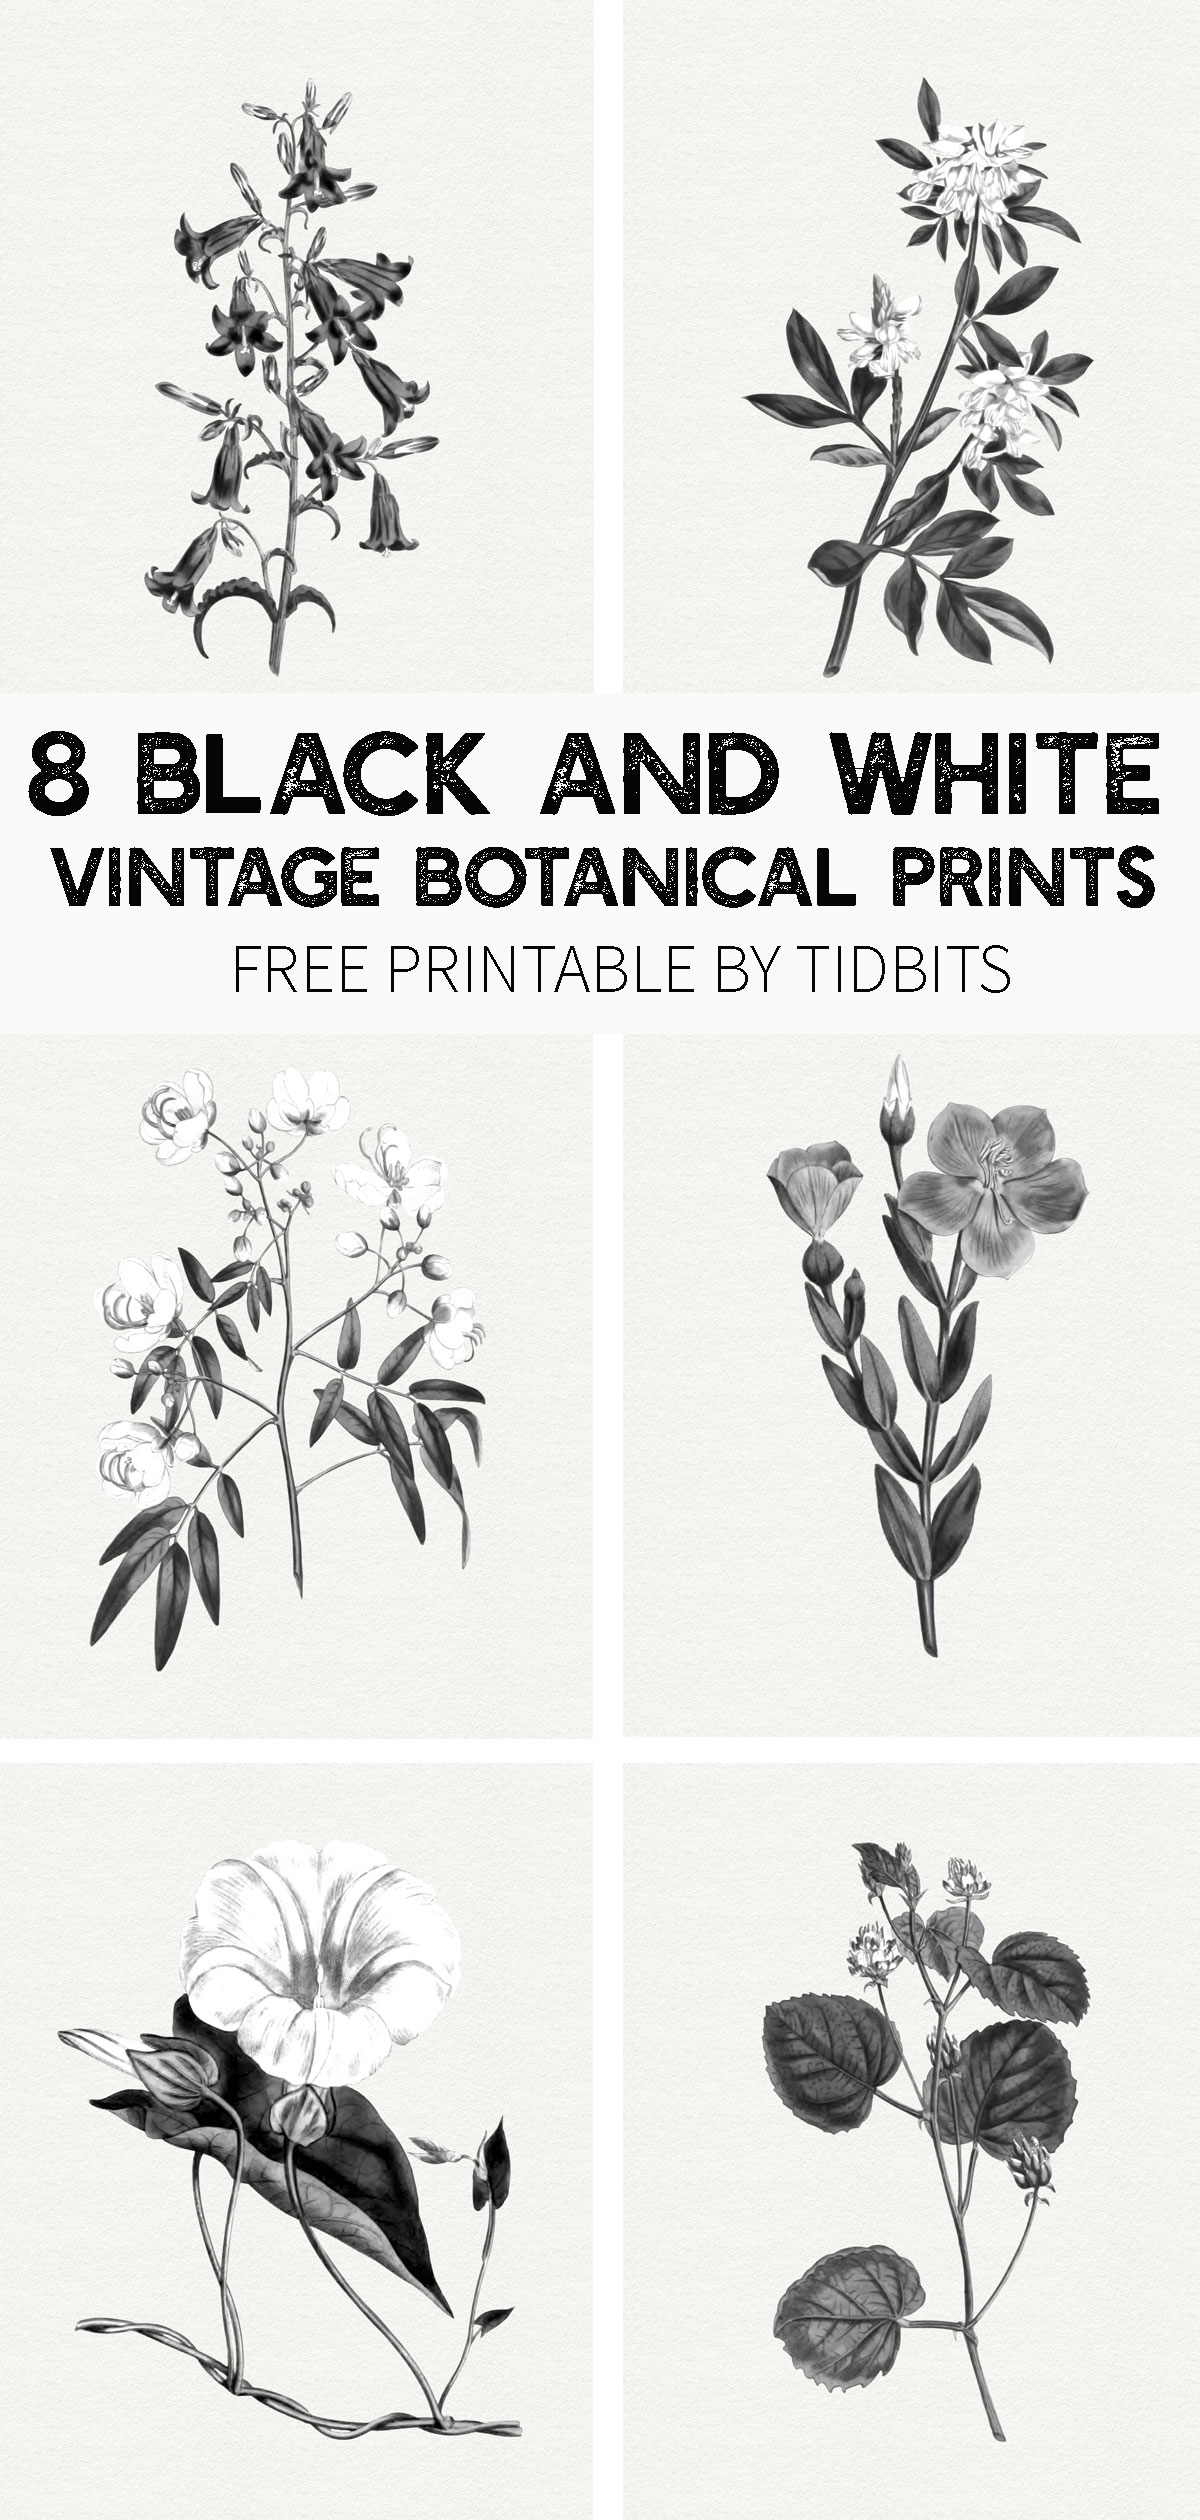 Free Black And White Vintage Botanical Prints - Tidbits for Free Black And White Printables